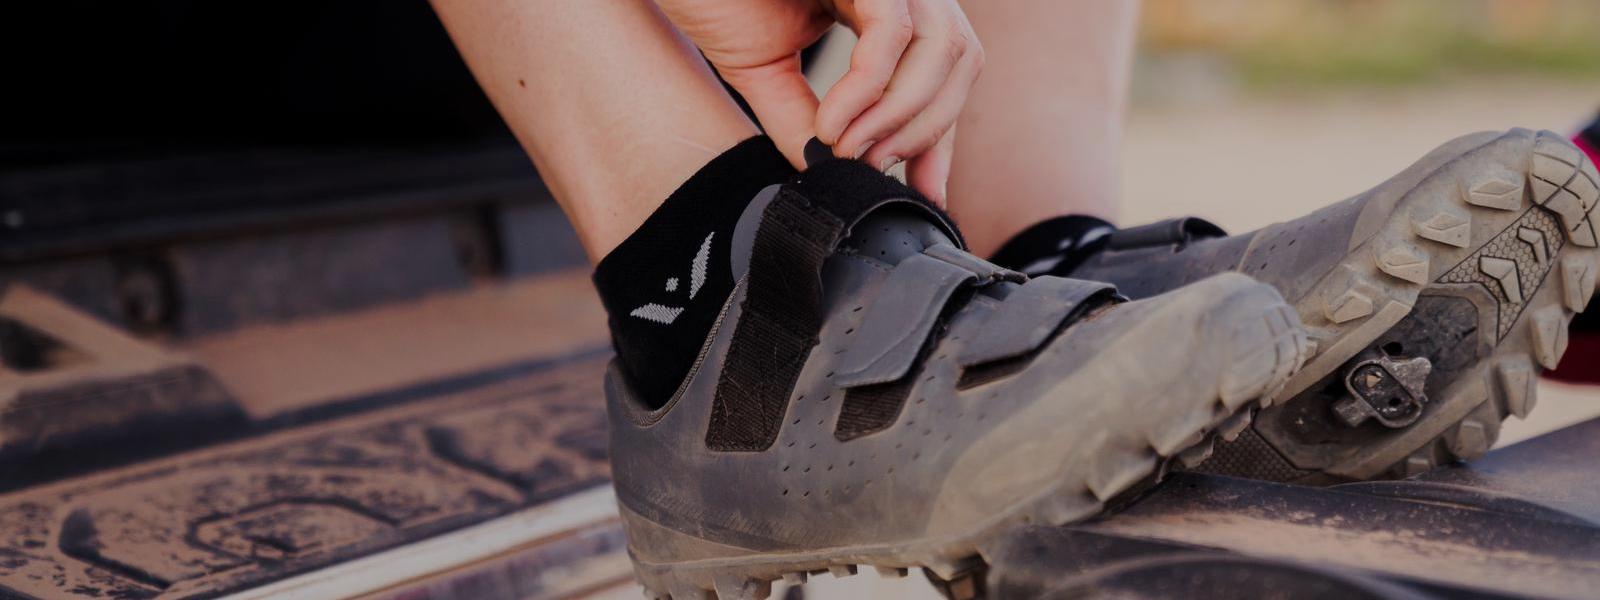 Women's Ankle Socks header image, woman hiking